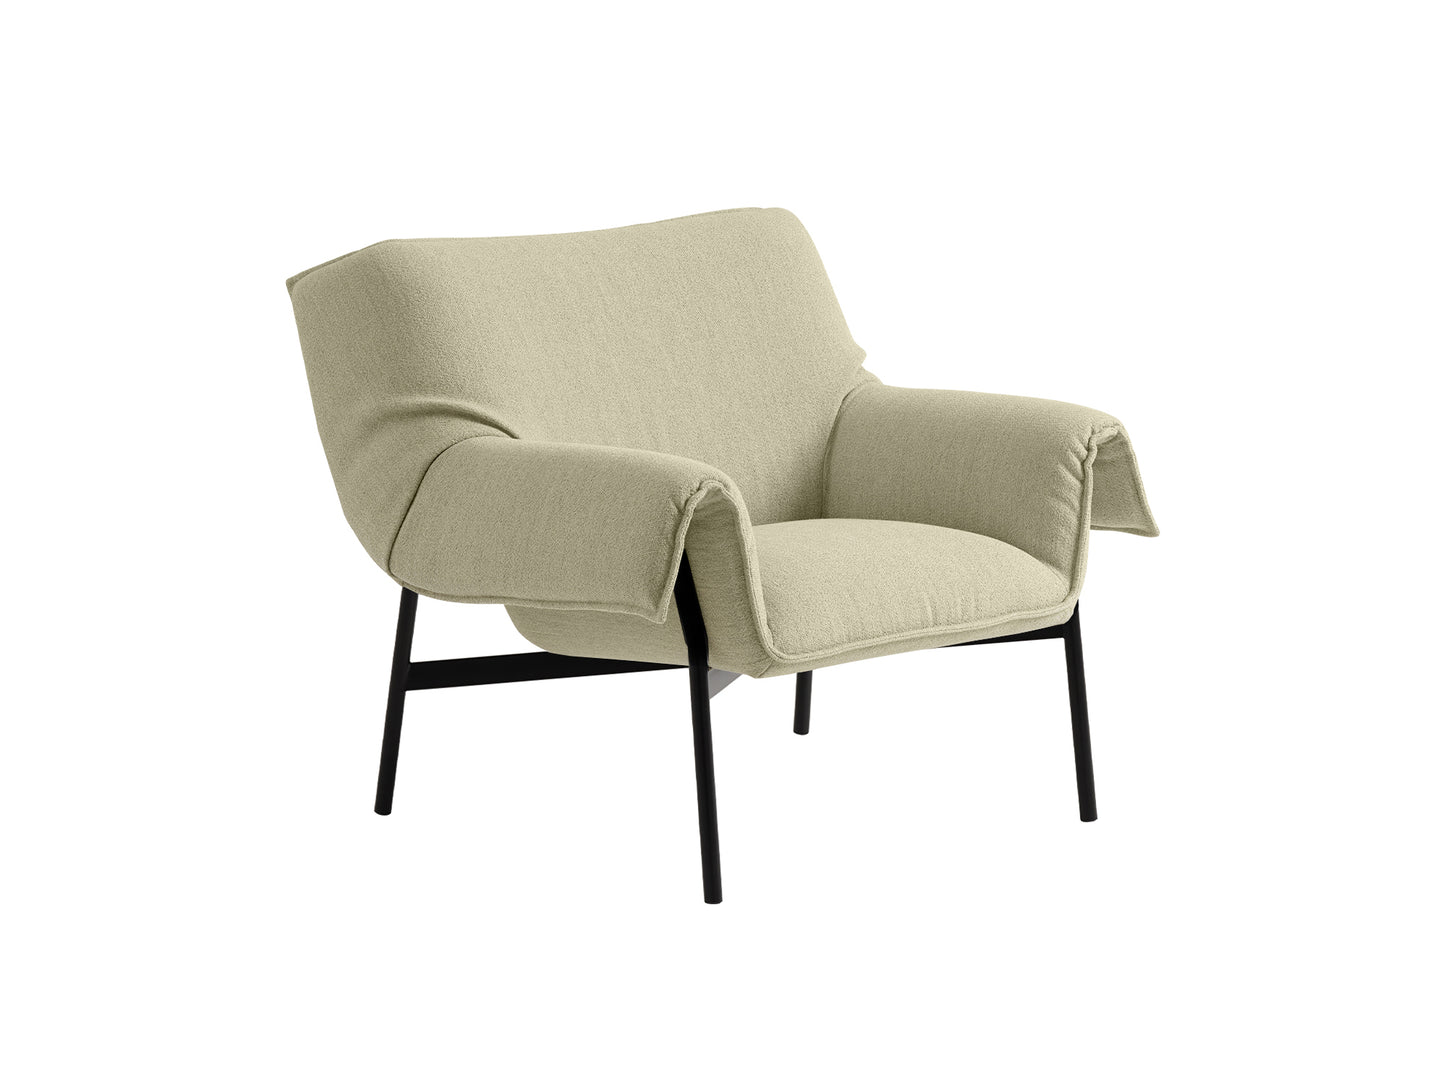 Wrap Lounge Chair by Muuto - Ecriture 910 / Black Base